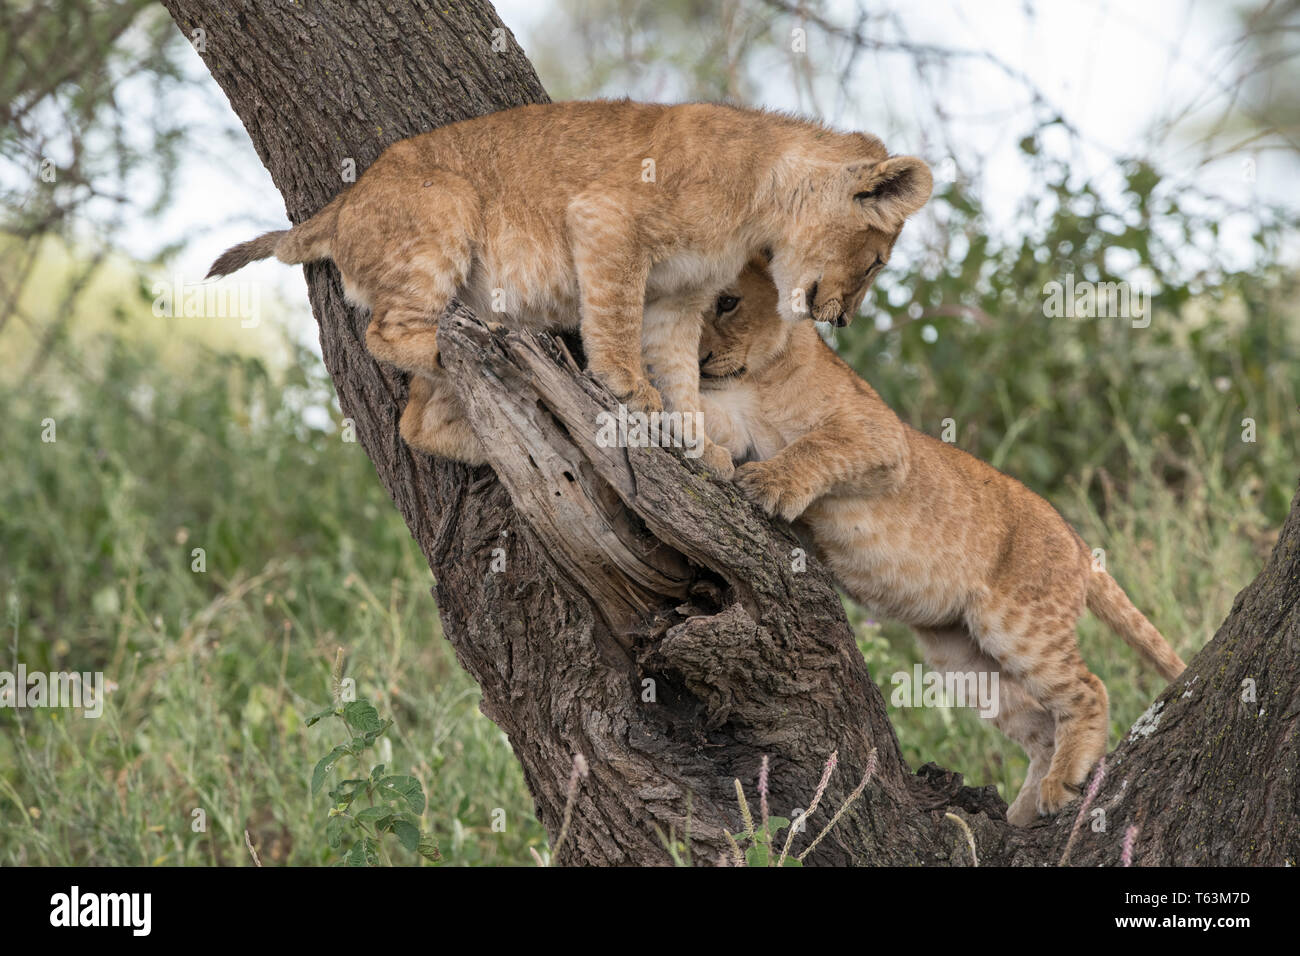 Lion cubs climbing in tree, Tanzania Stock Photo